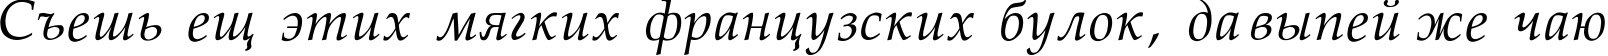 Пример написания шрифтом Palatino-Normal-Italic текста на русском